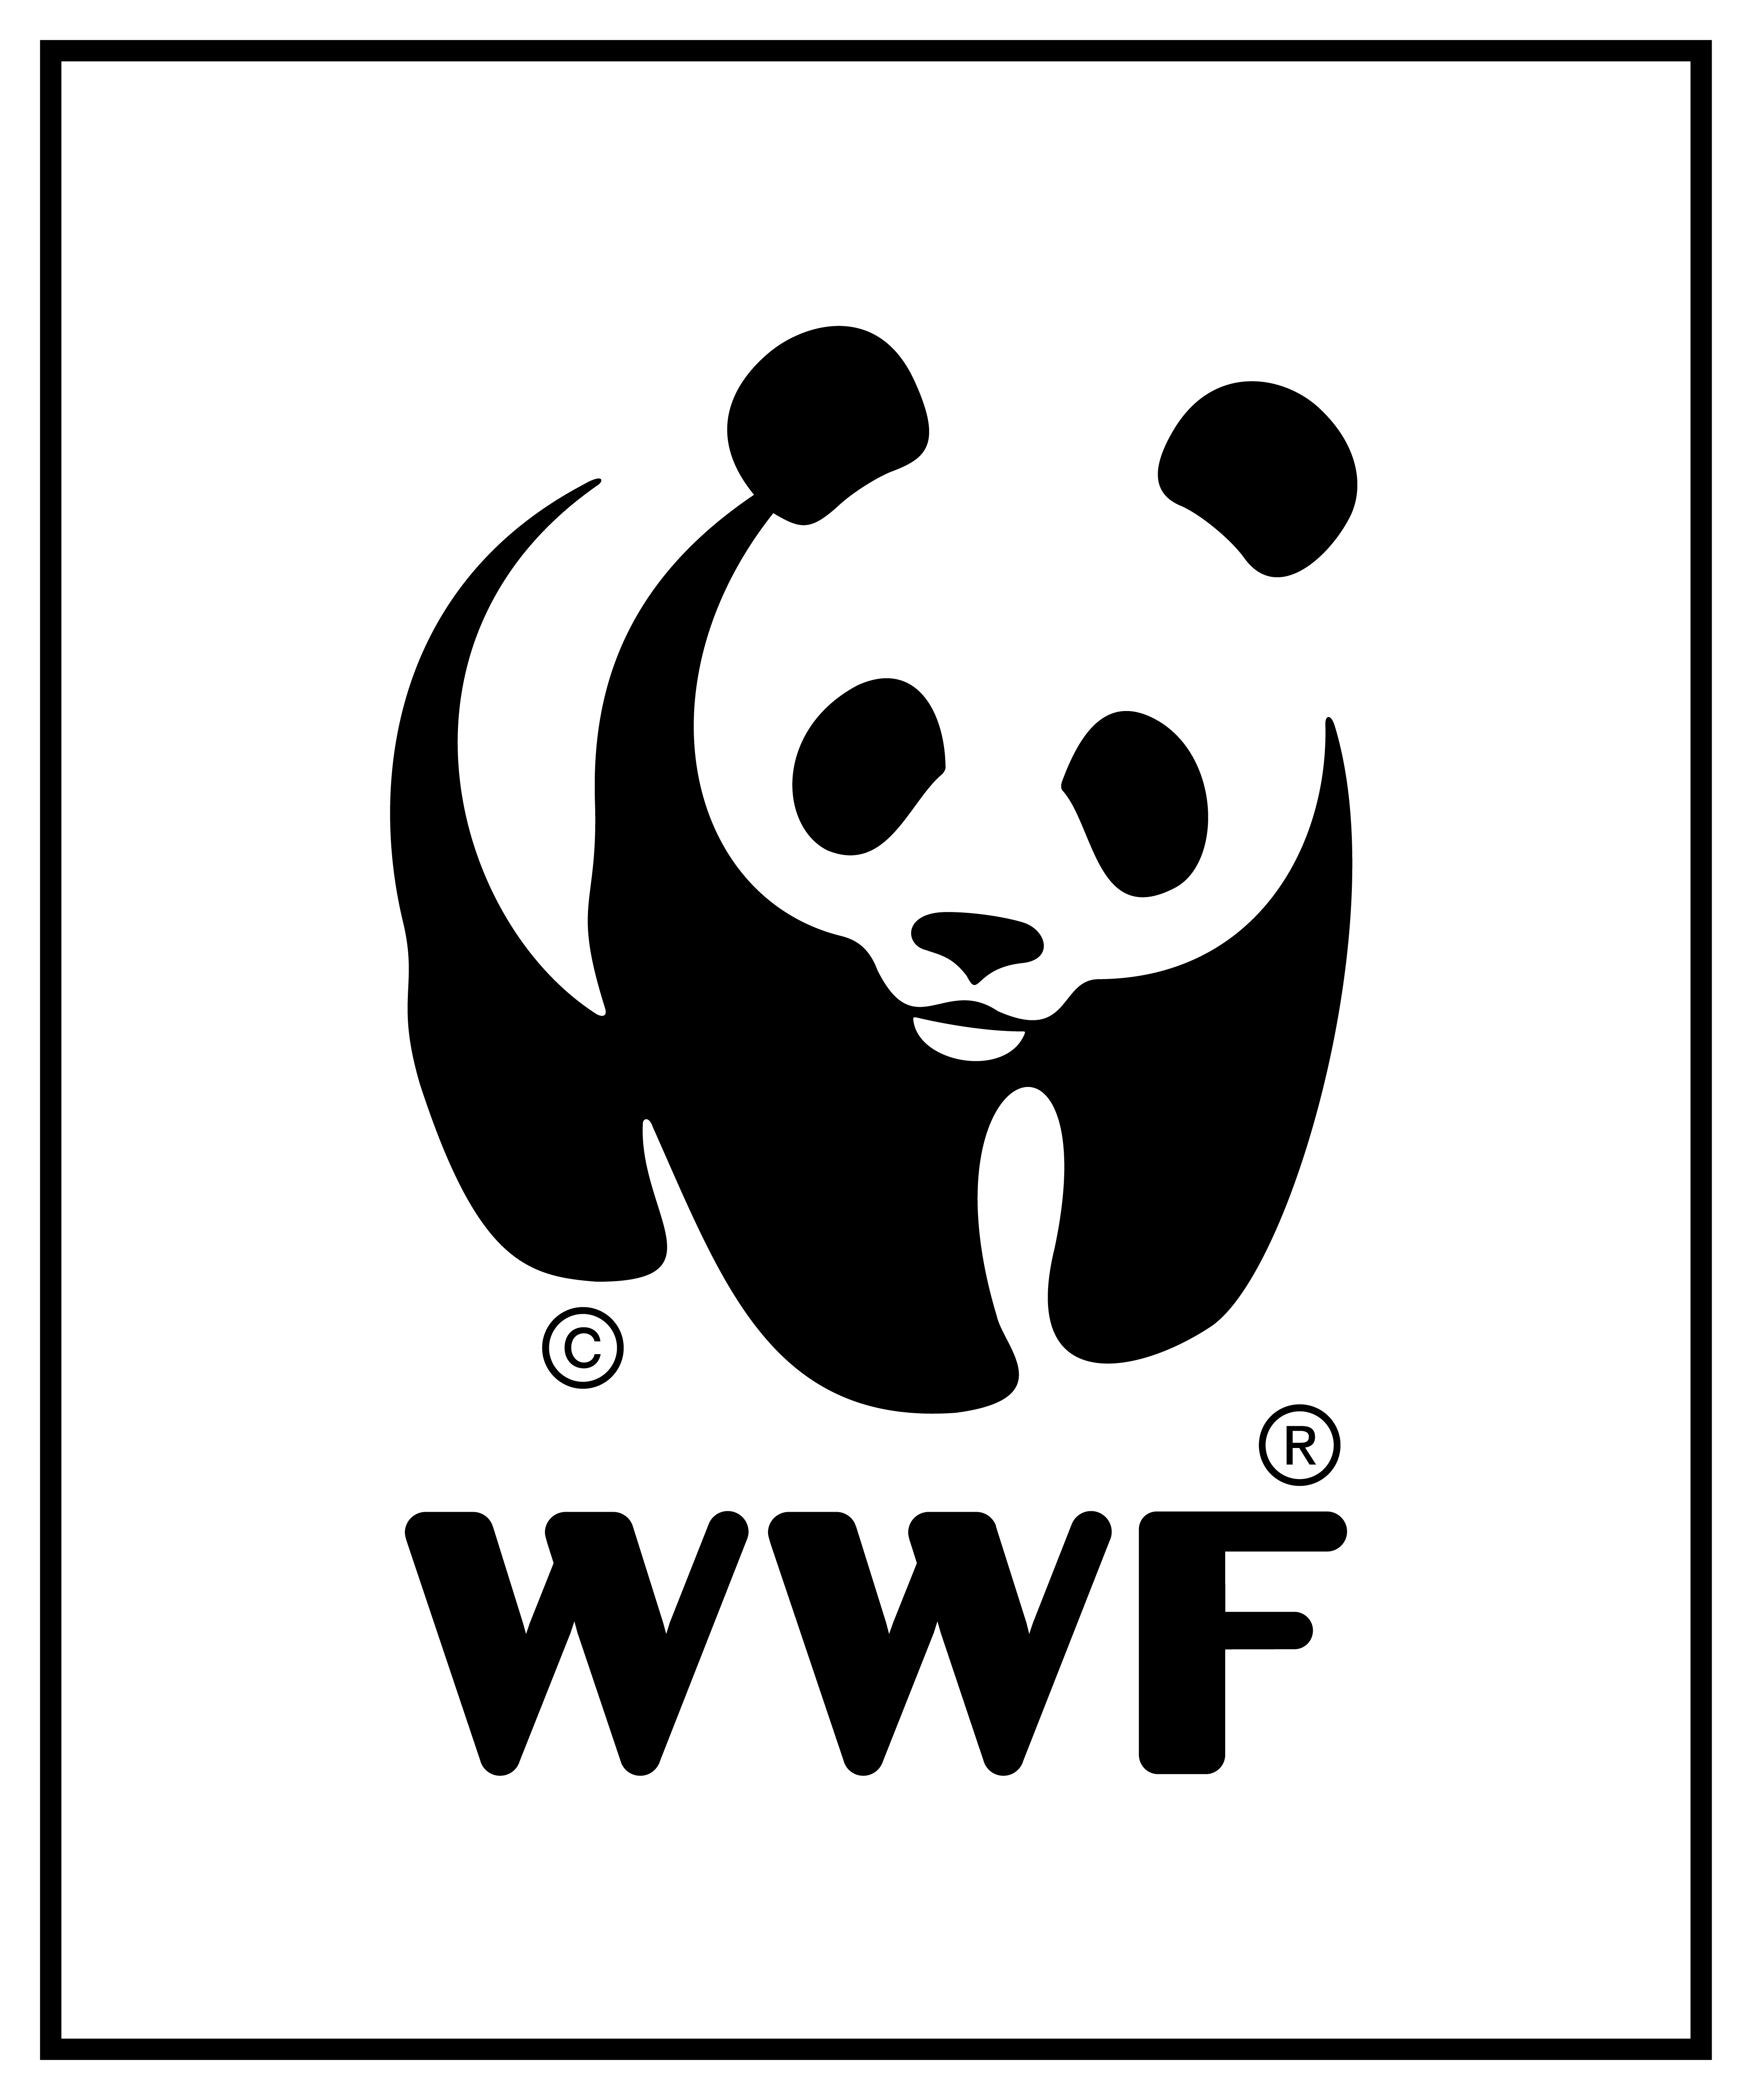 Earth Hour 2021: WWF